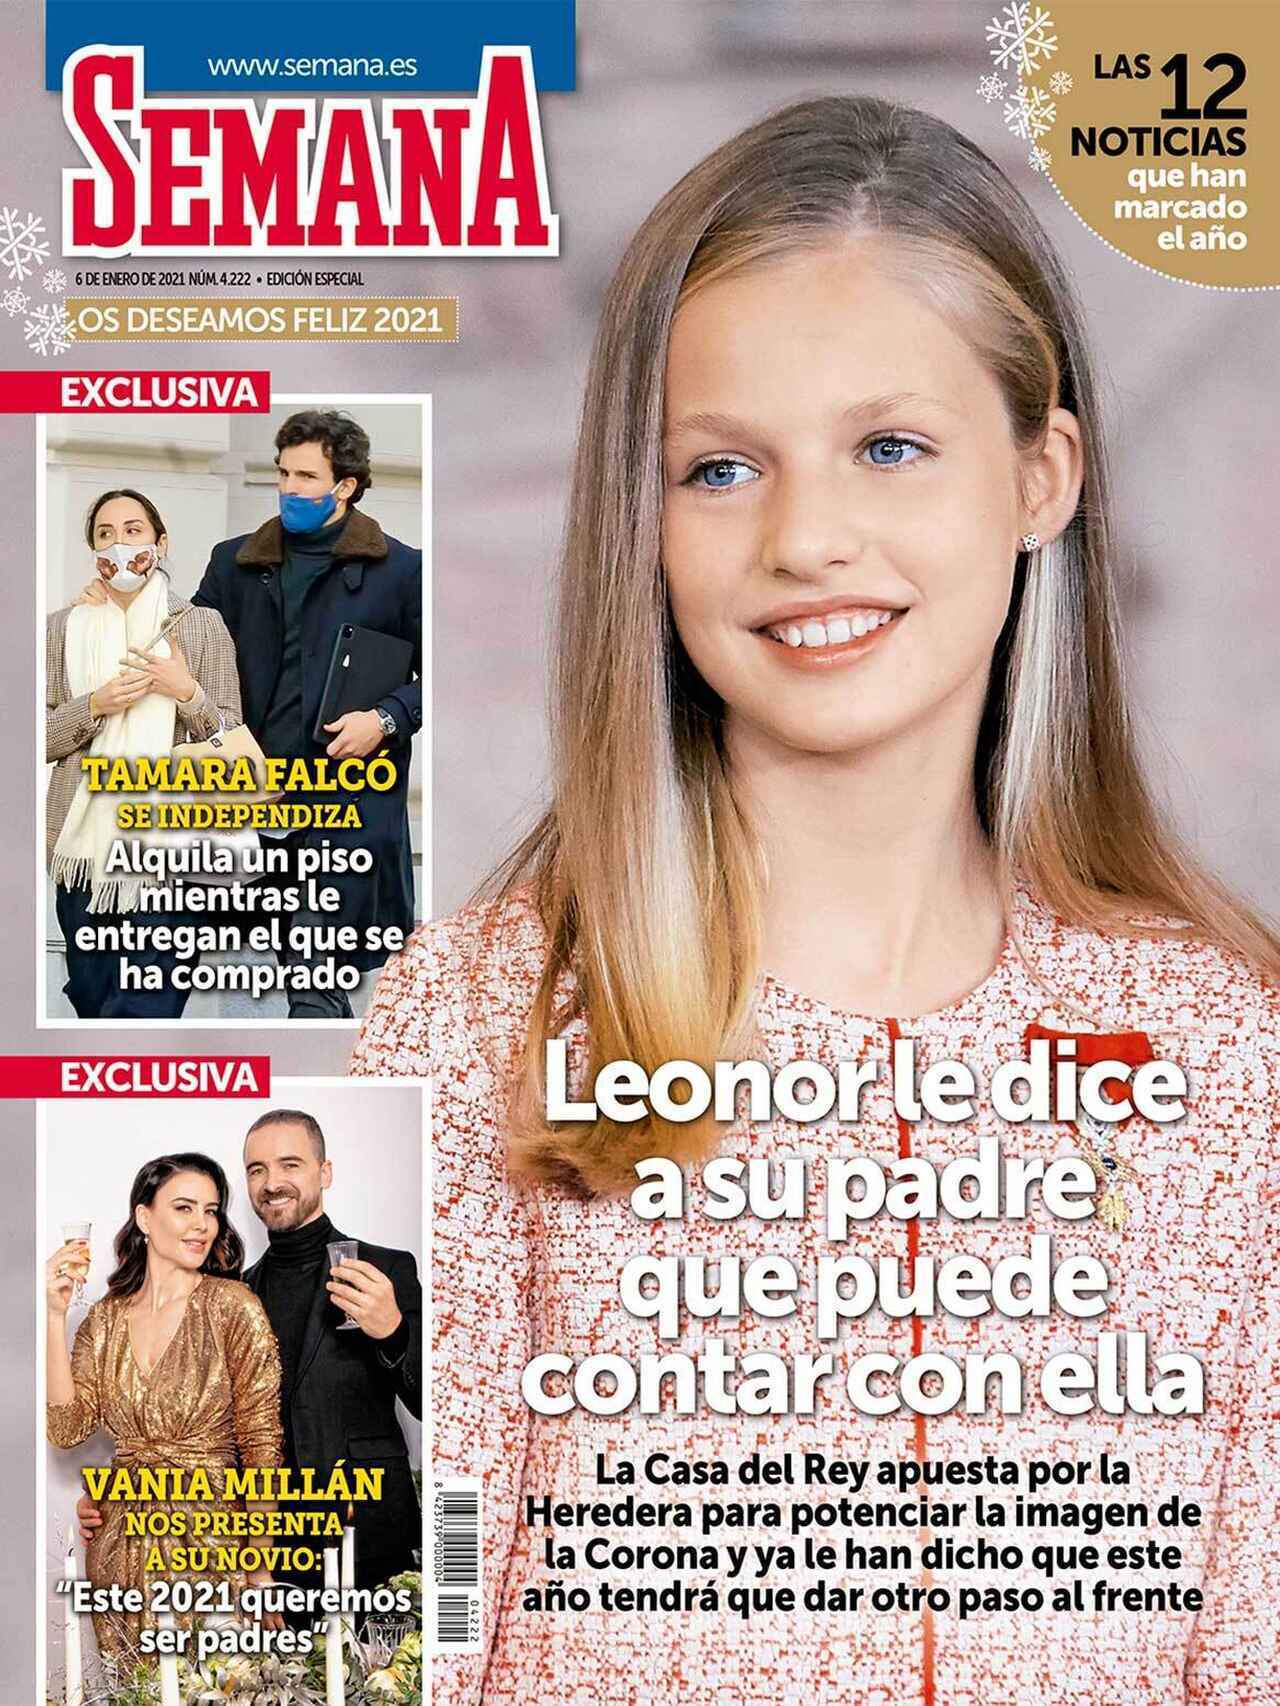 Vania Millán en portada de 'Semana'.